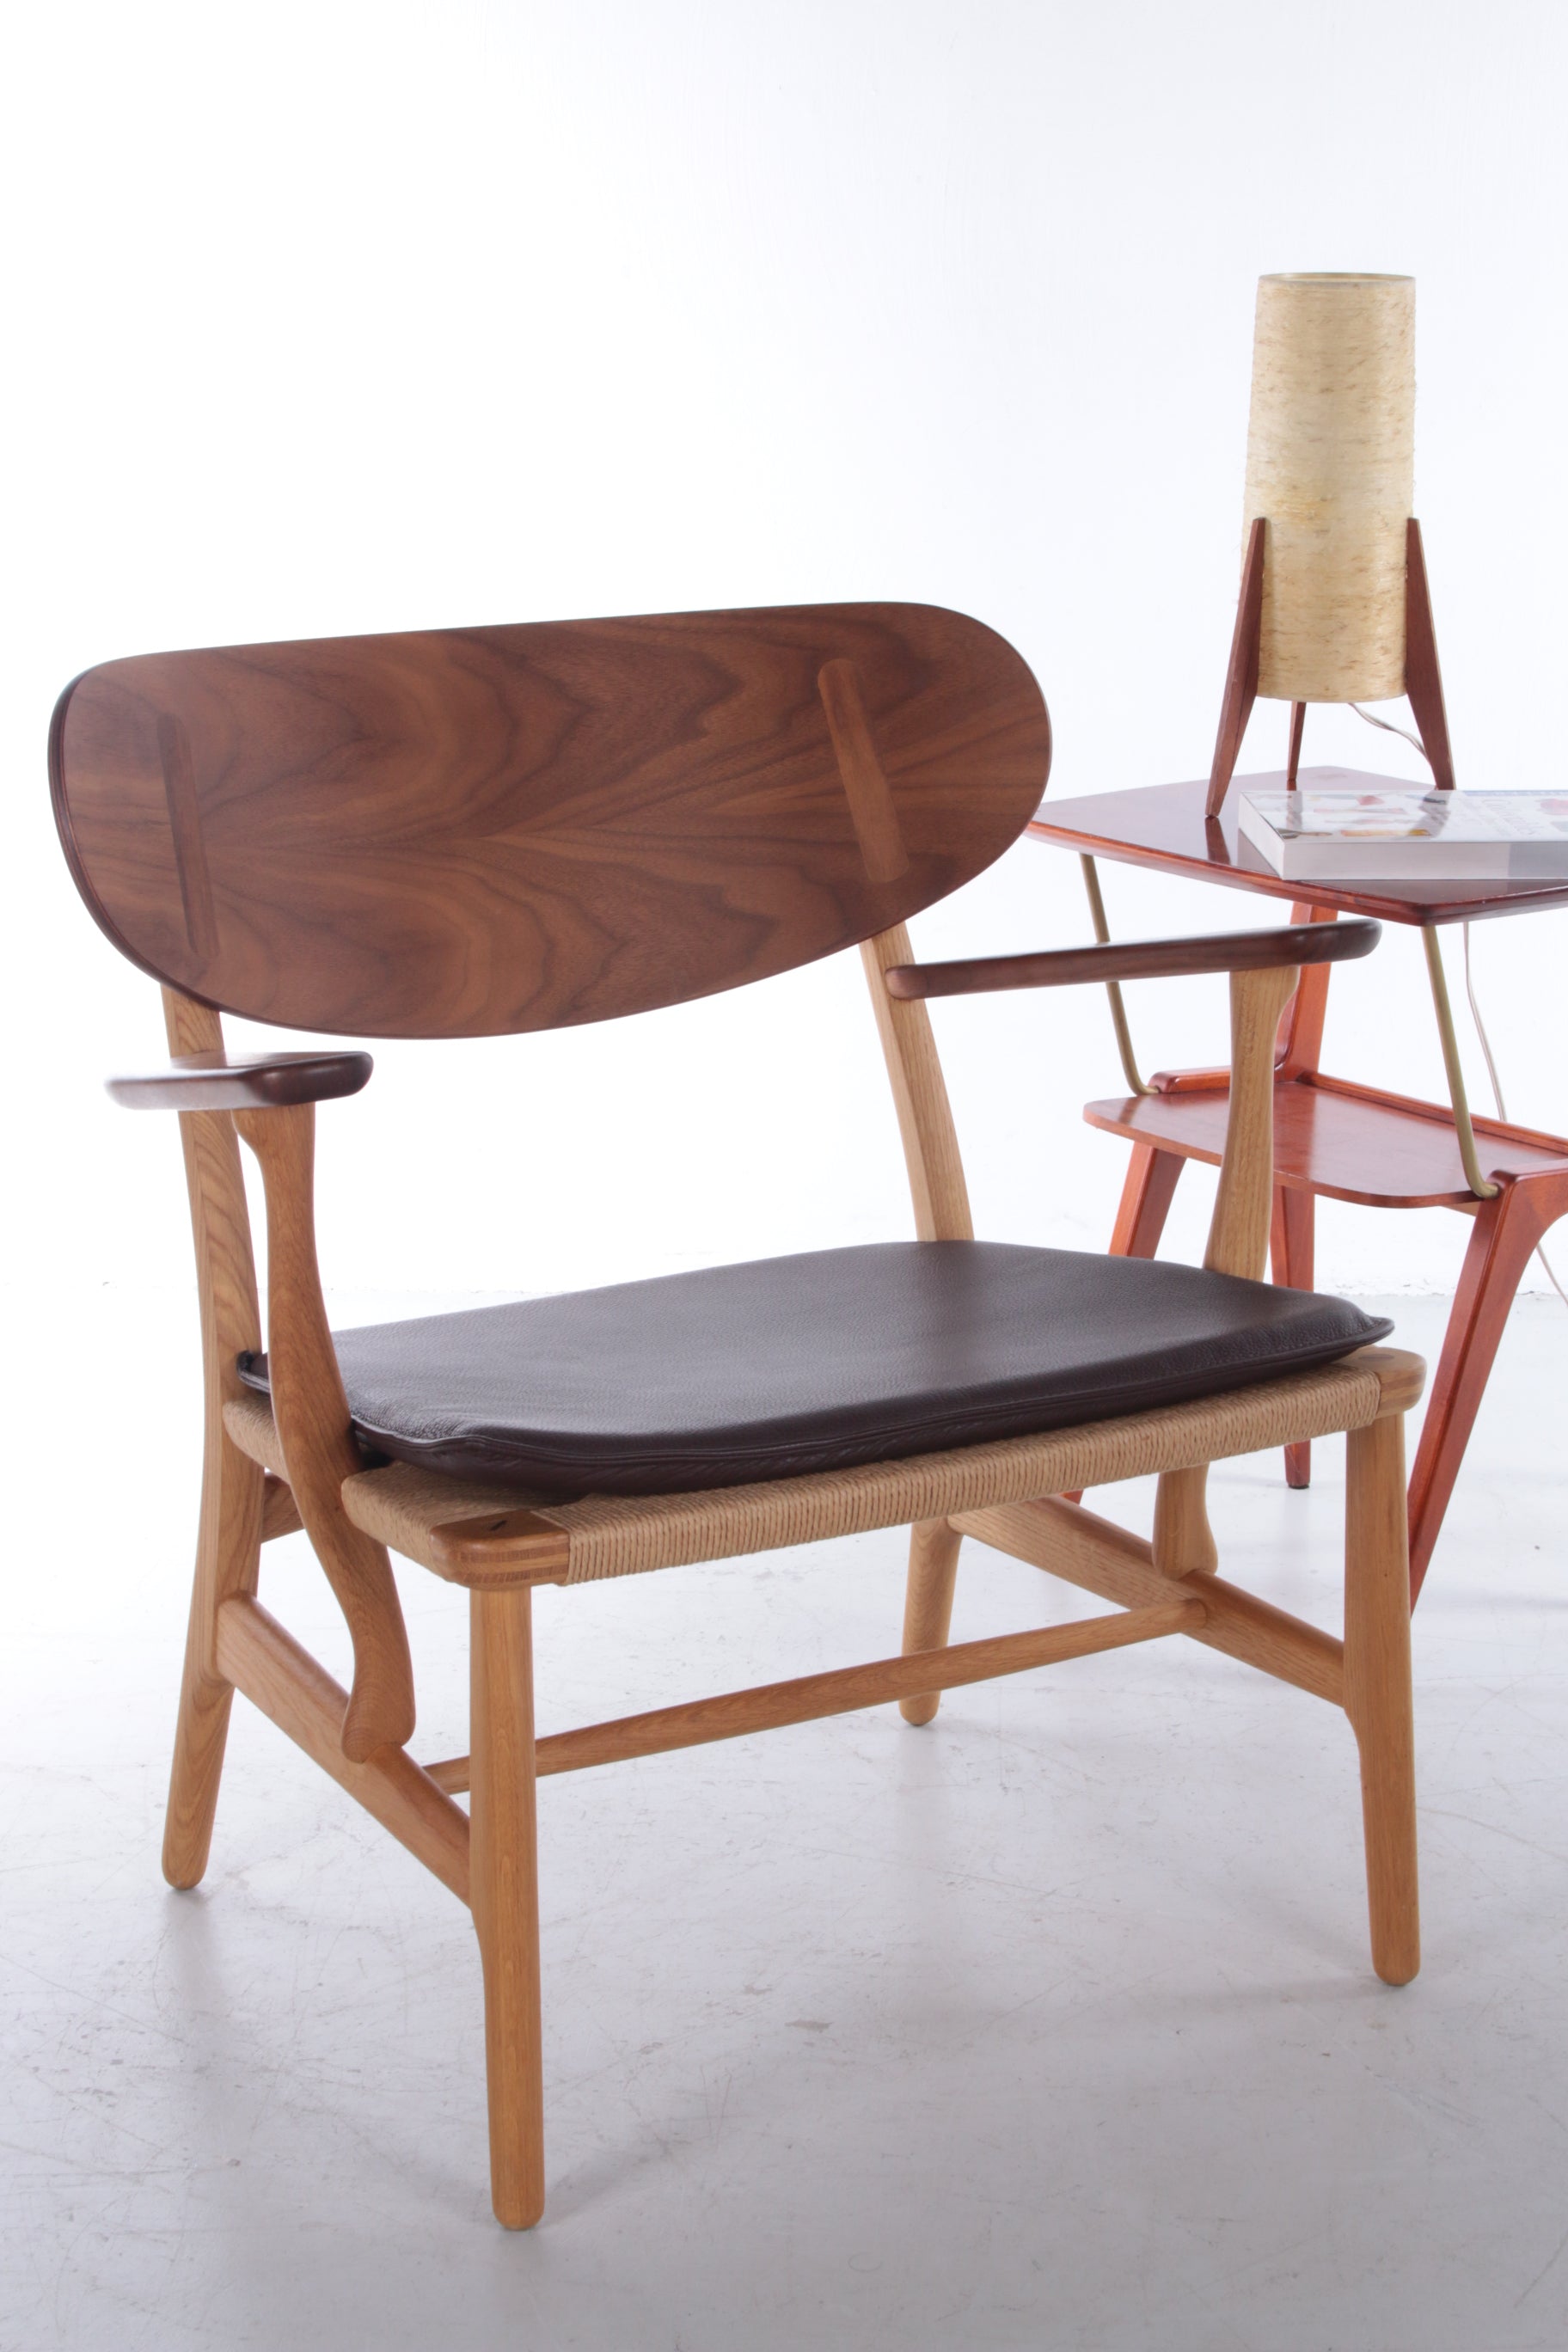 Model CH22 Lounge Chair by Hans J. Wegner for Carl Hansen & Søn sfeerfoto